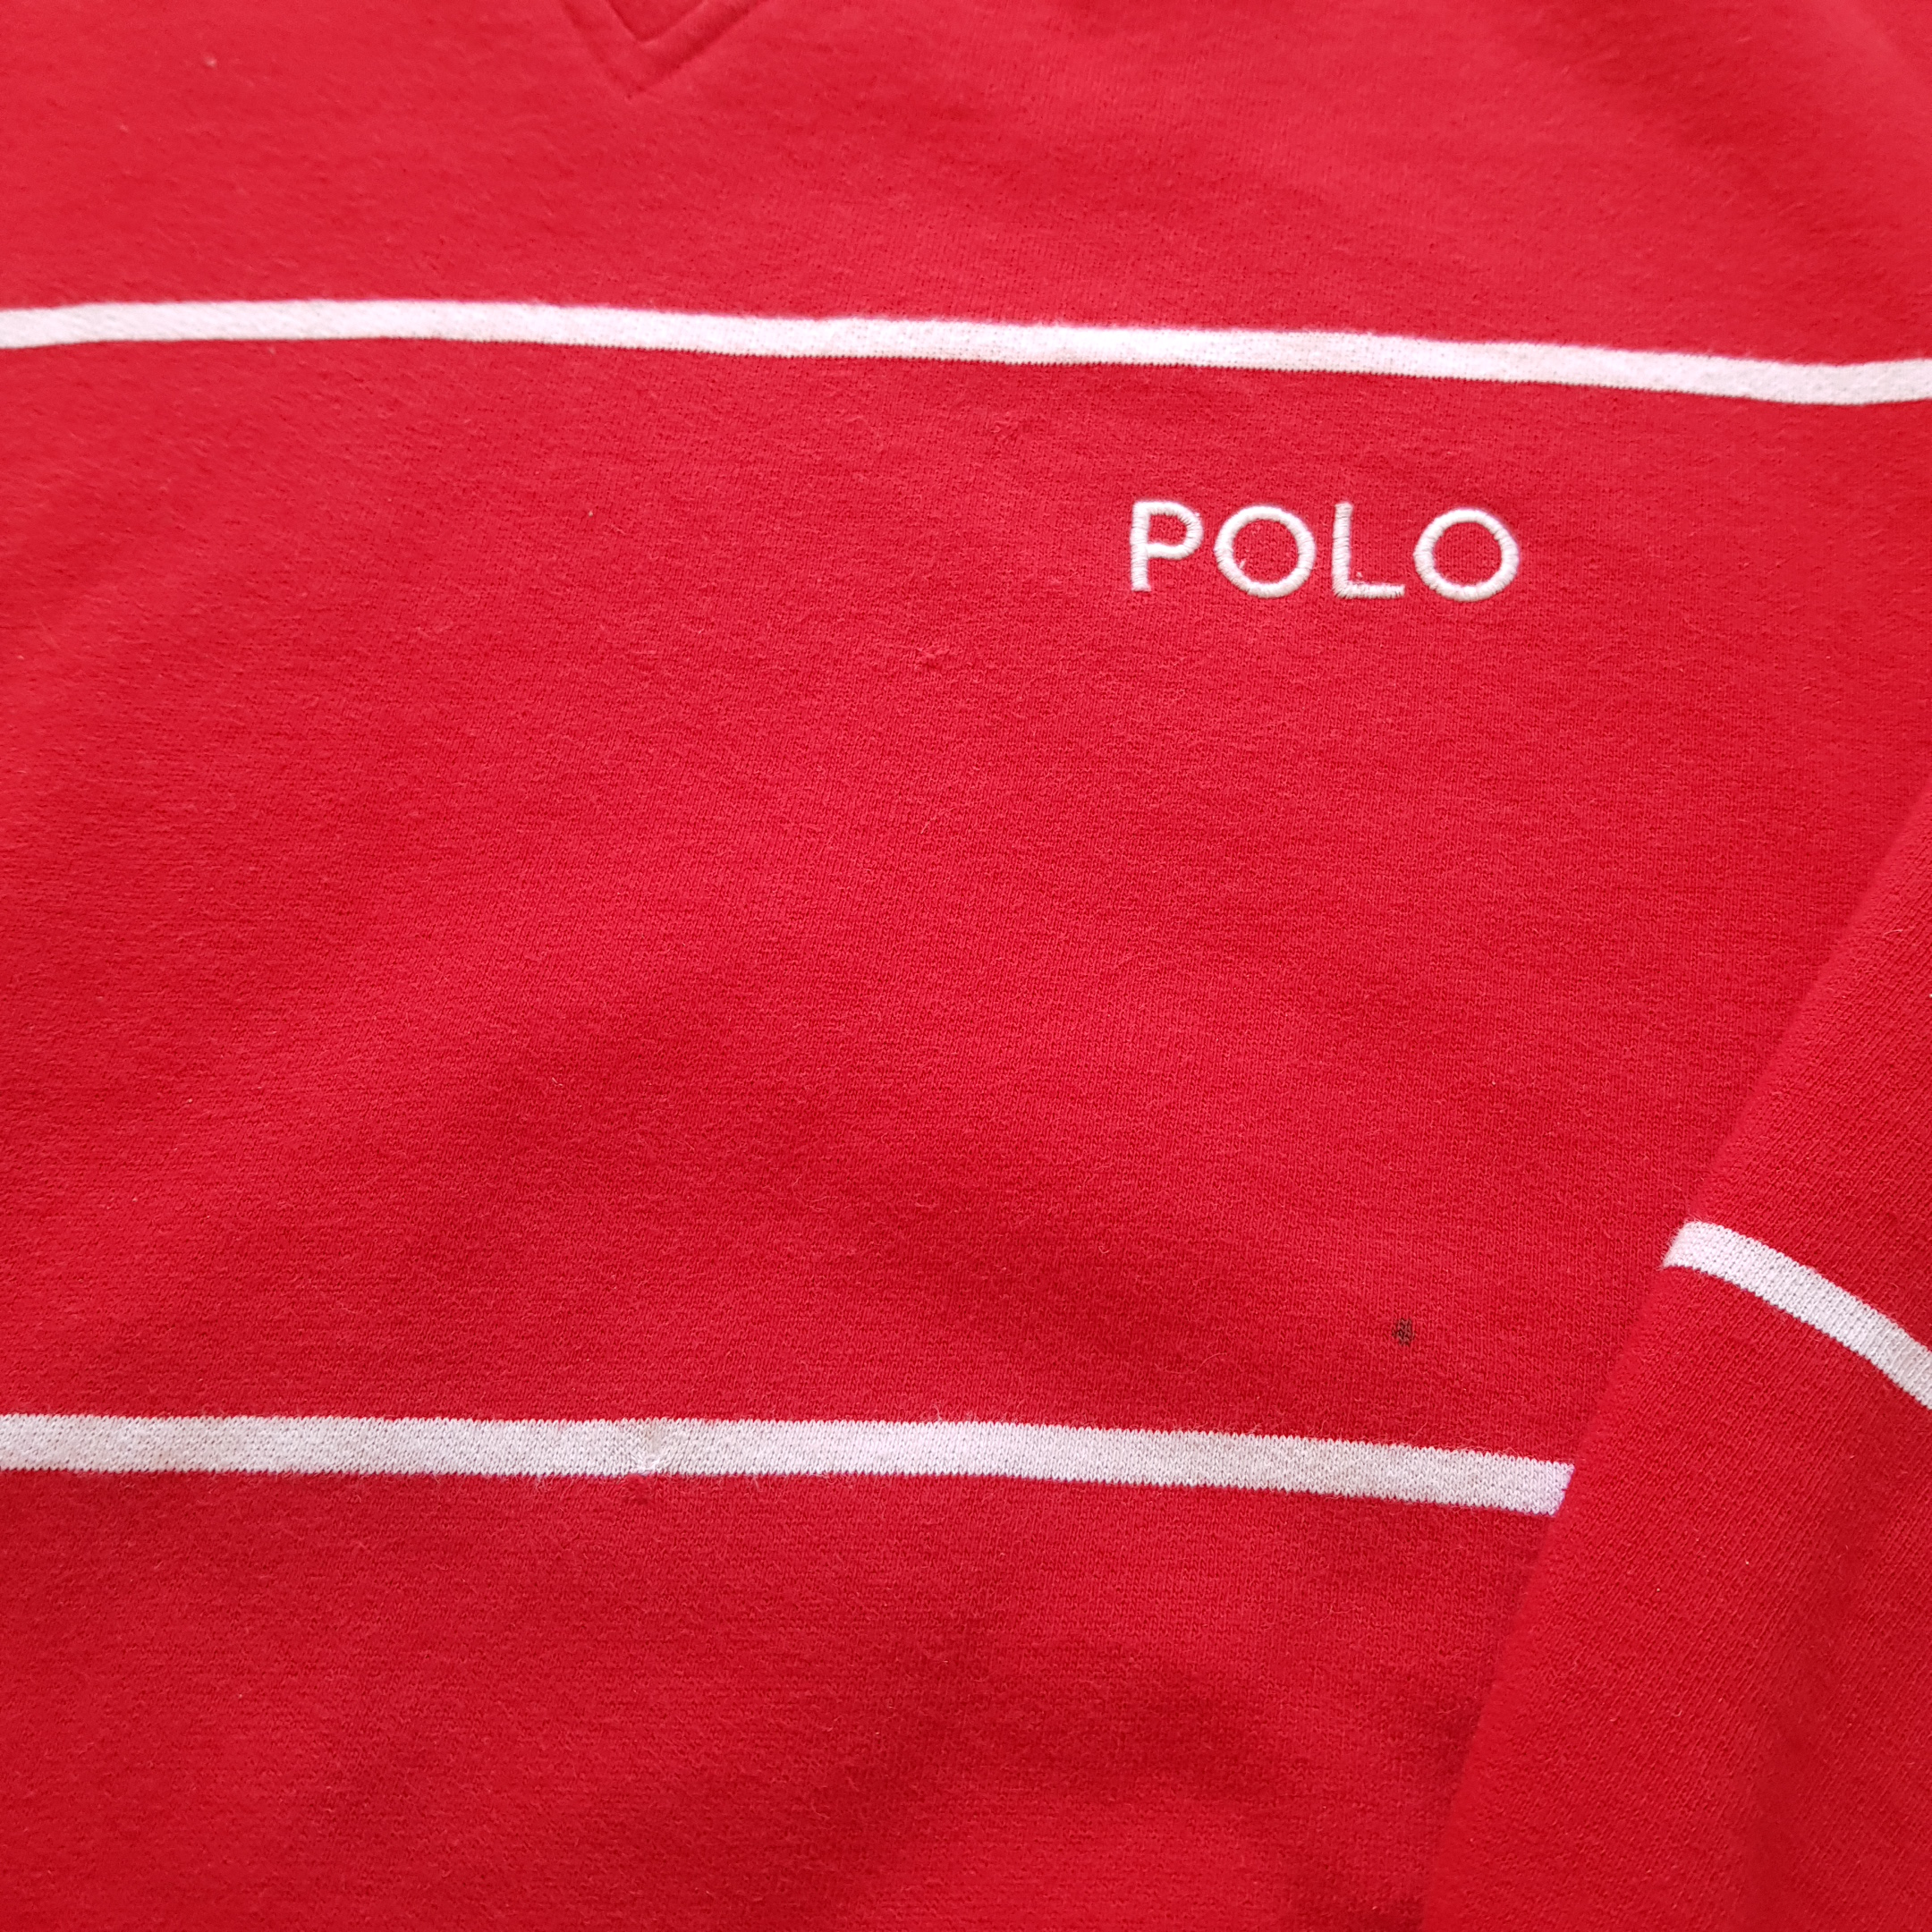 Rare Polo Striped 80s Sweatshirt - Retro Robes